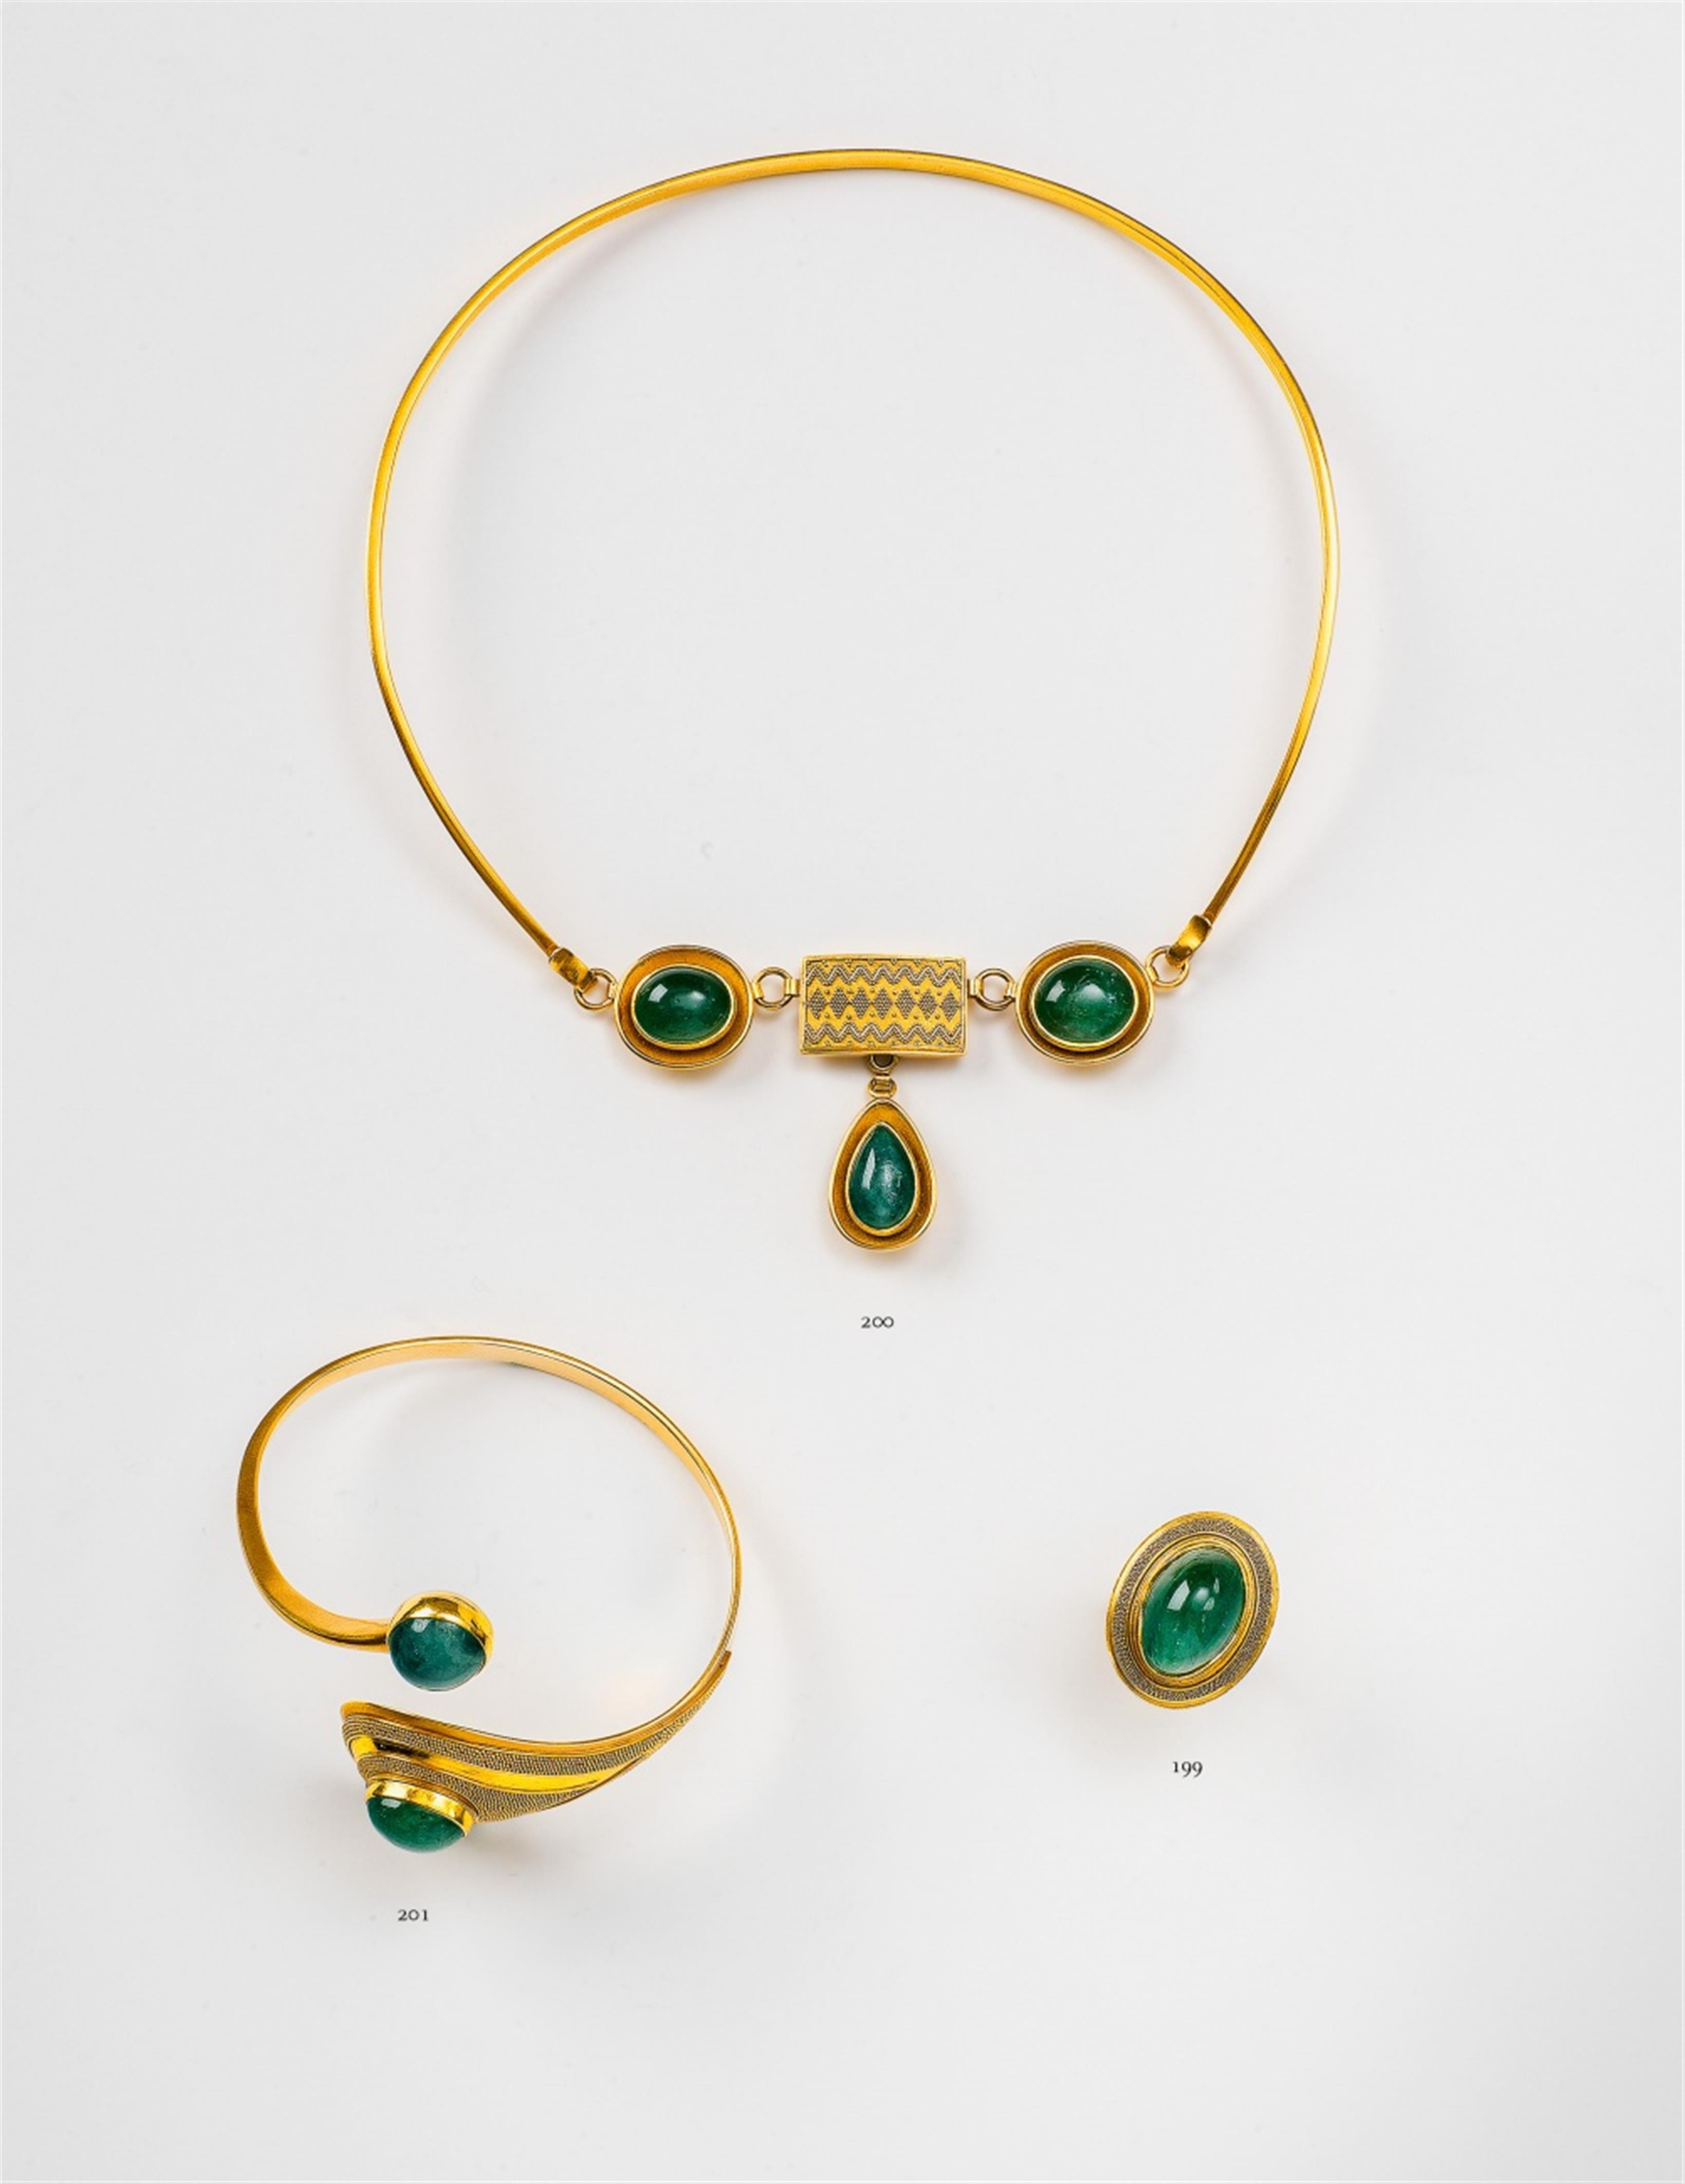 An 18k gold choker with an emerald pendant - image-1